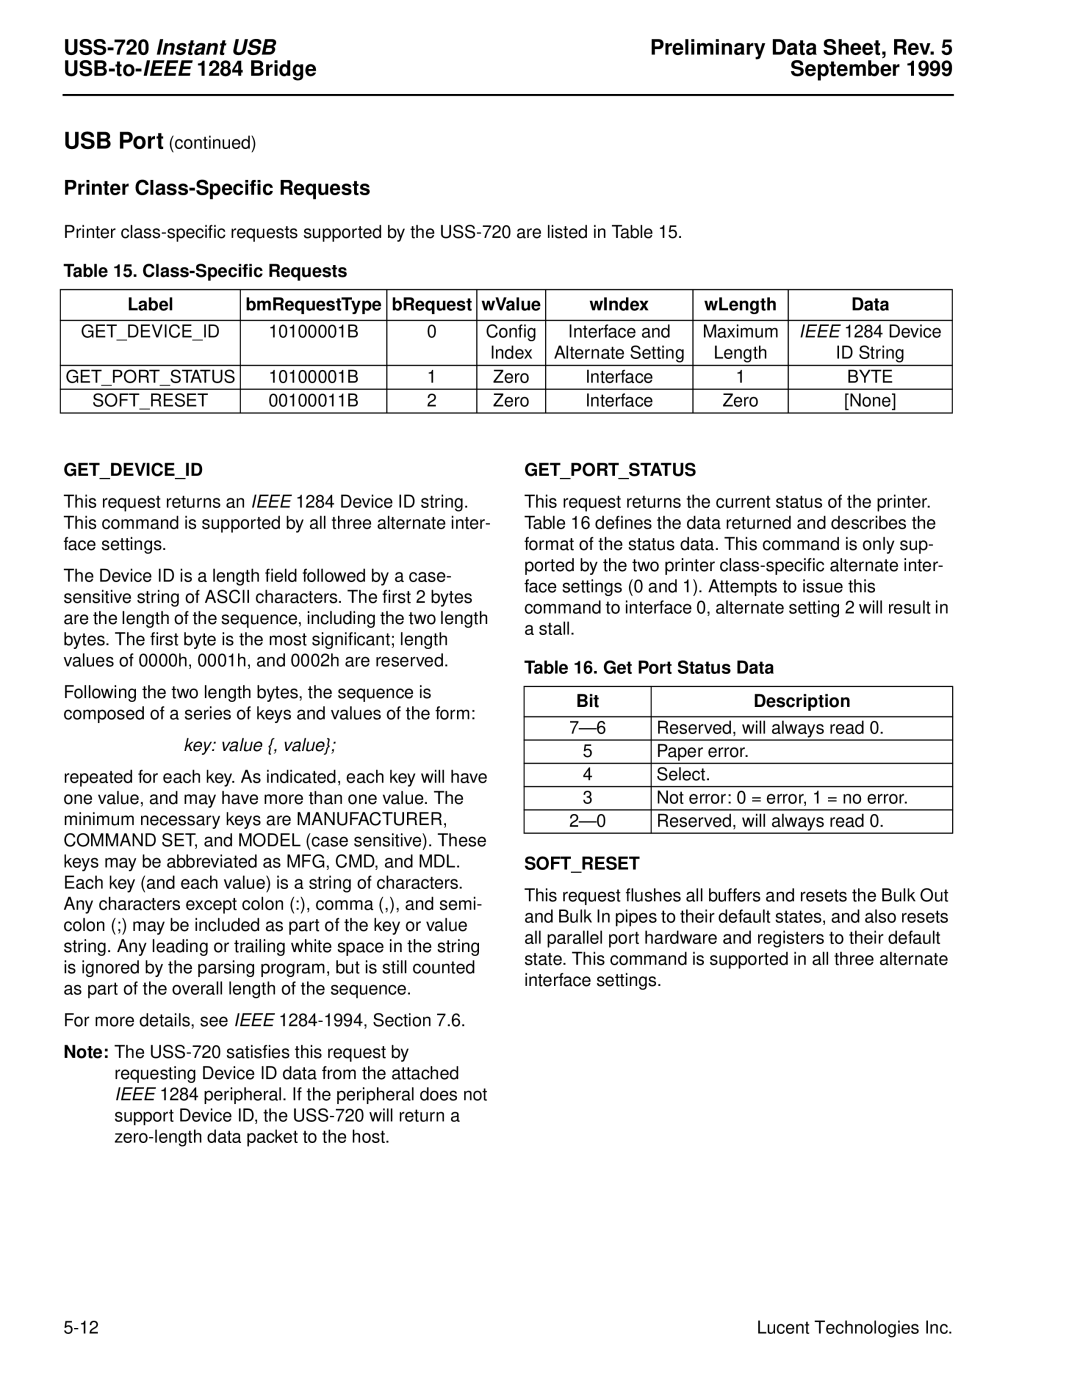 Lucent Technologies manual Printer Class-Speciﬁc Requests, USS-720 Instant USB, Preliminary Data Sheet, Rev, September 